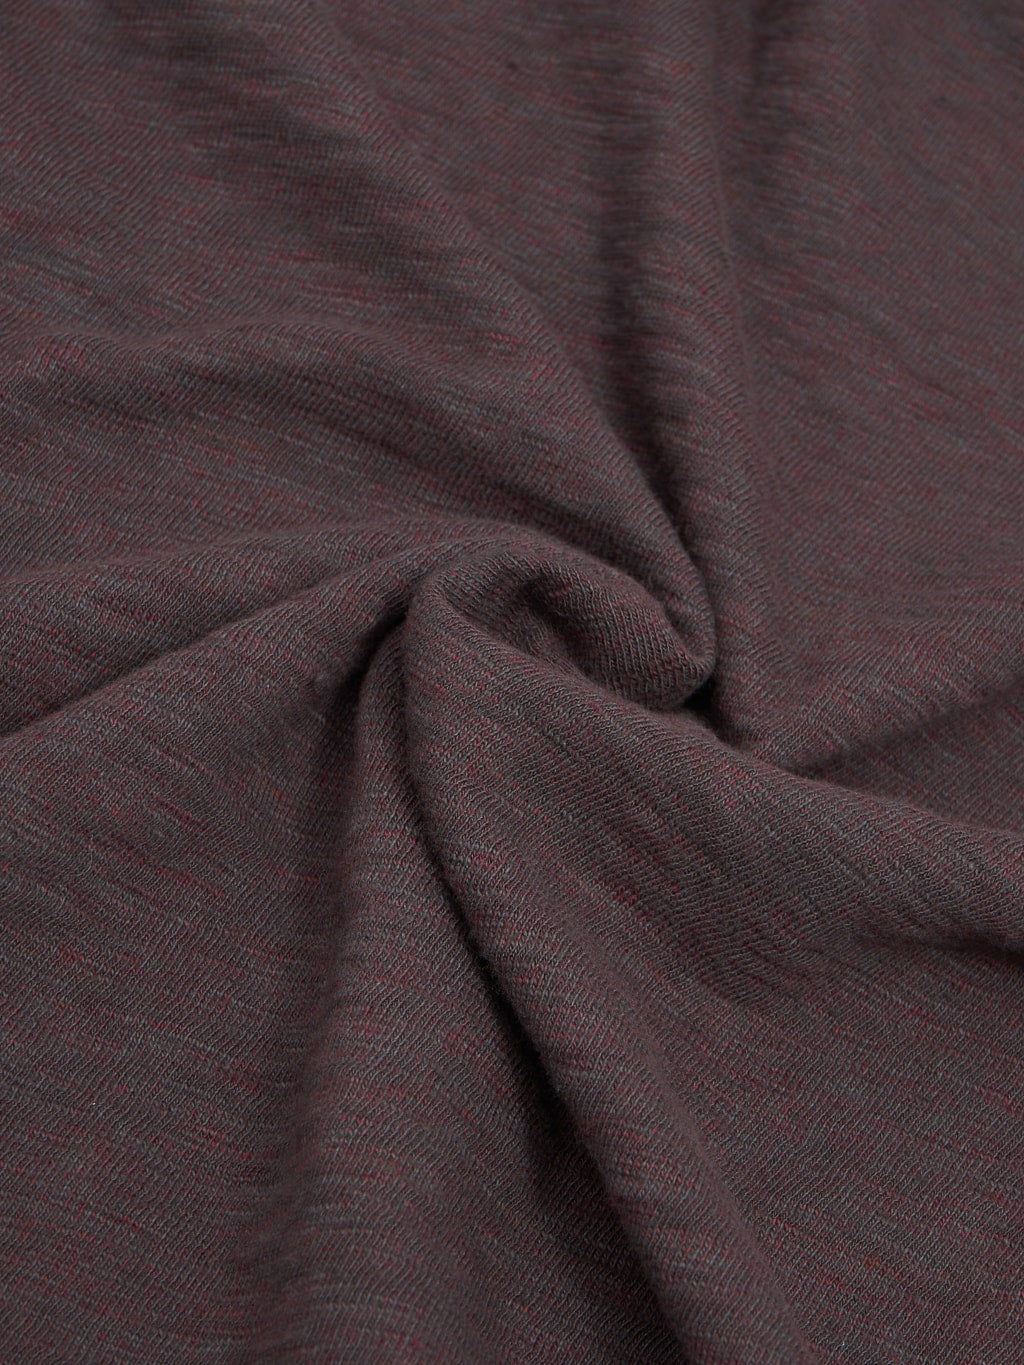 loop and weft double binder neck heather slub knit tshirt black texture